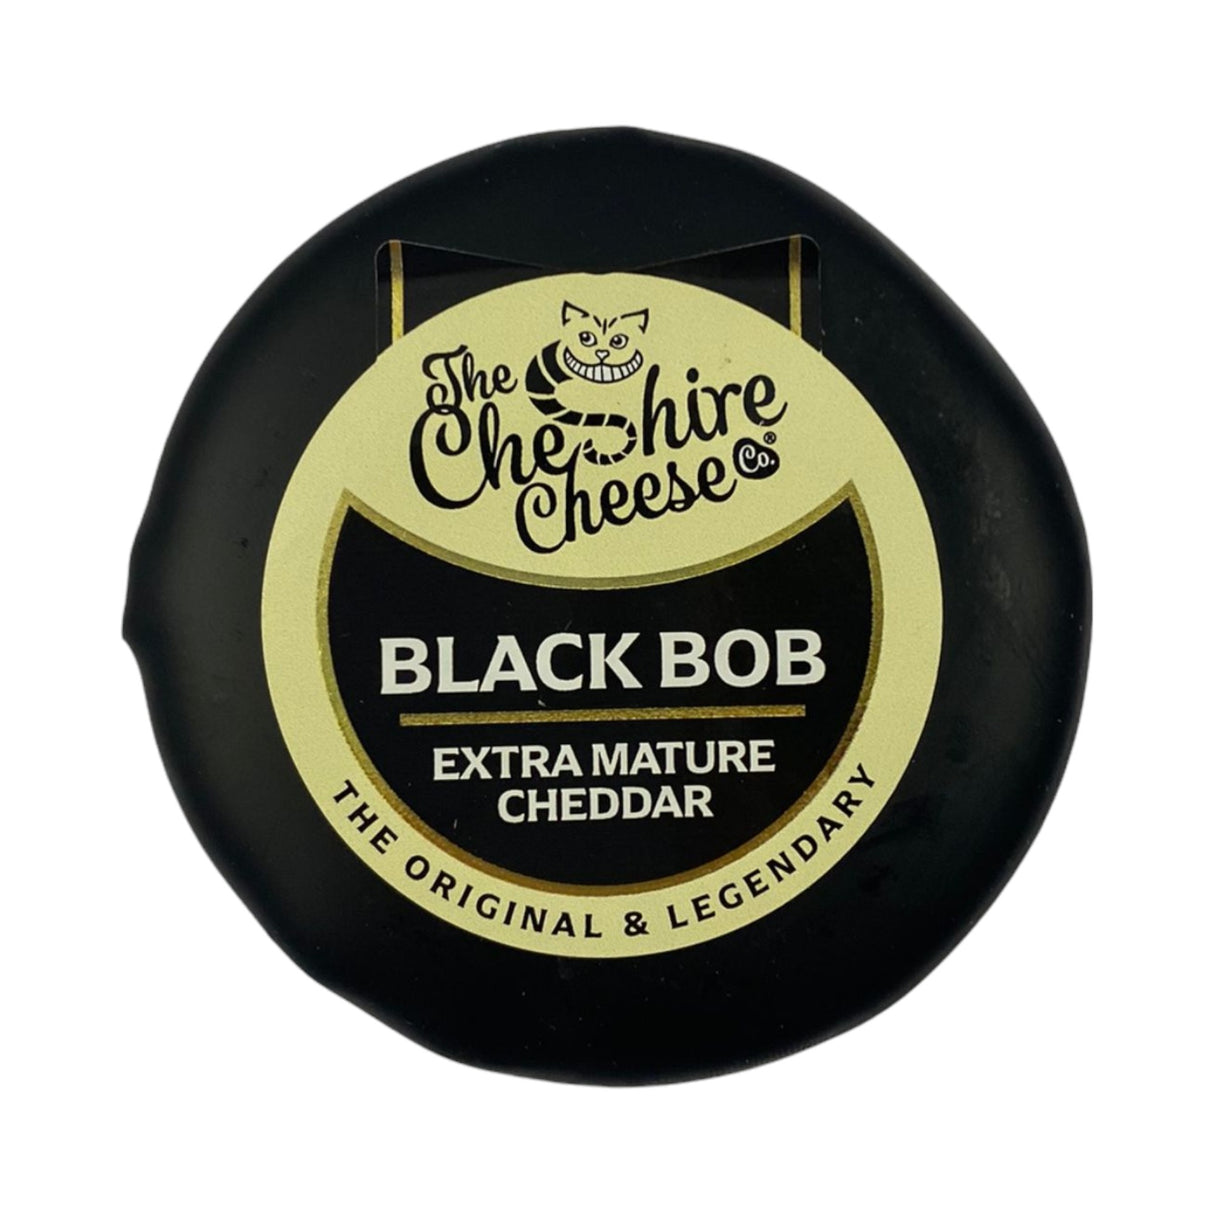 Cheshire Cheese - Black Bob Cheddar 200g